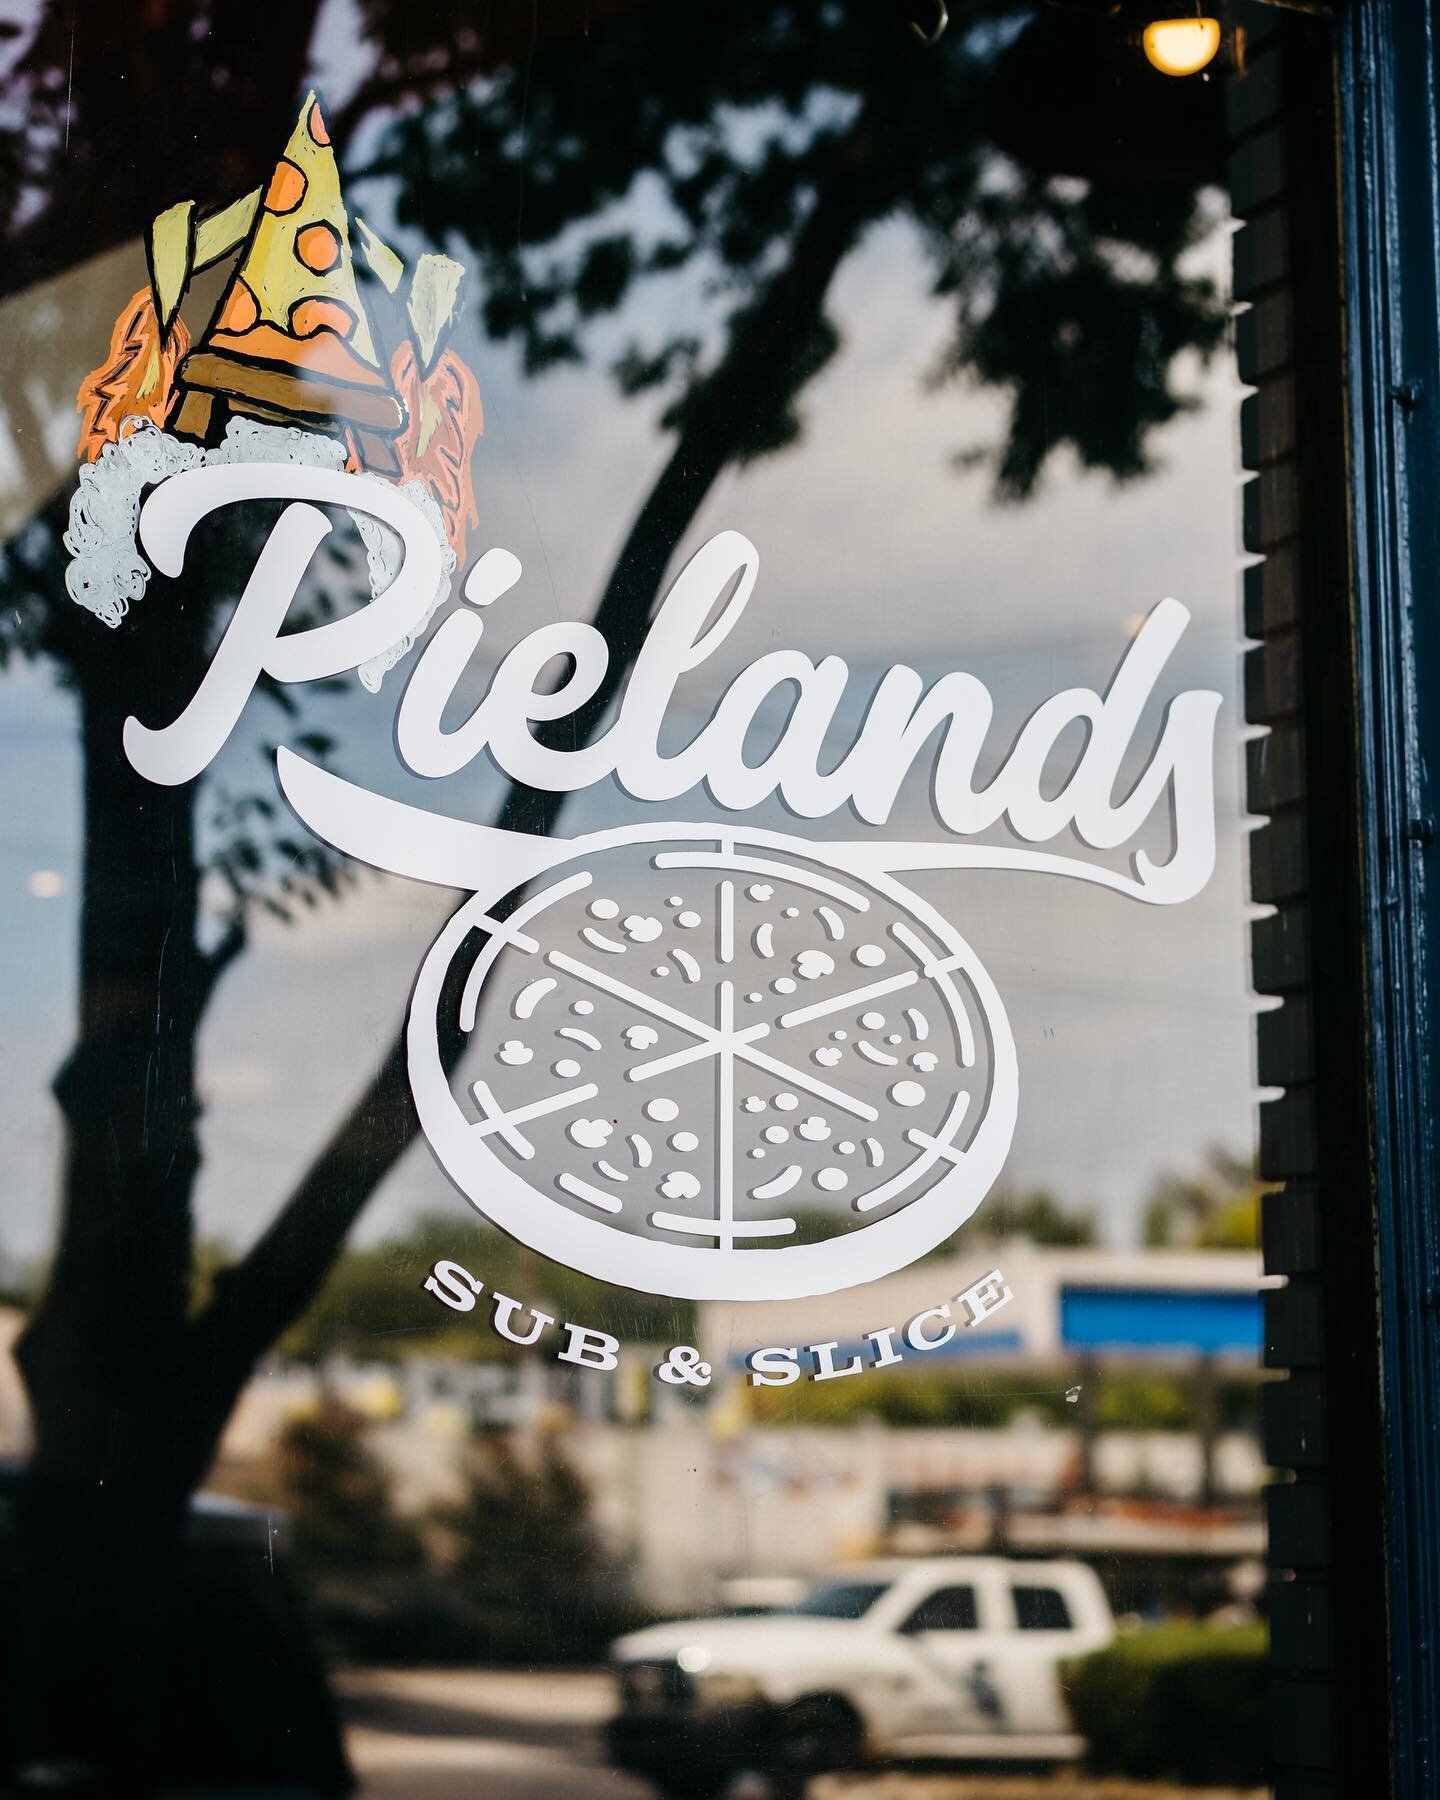 Your sign to 𝓽𝓻𝓮𝓪𝓽 𝔂𝓸𝓾𝓻𝓼𝓮𝓵𝓯  to Pielands 🍕 
⠀
⠀
⠀
⠀
#pielandspizza #discoveratlanta #exploreatl #atlpizza #atlantapizza #atlpizzeria #vahi #virginiahighland #discoveratlanta